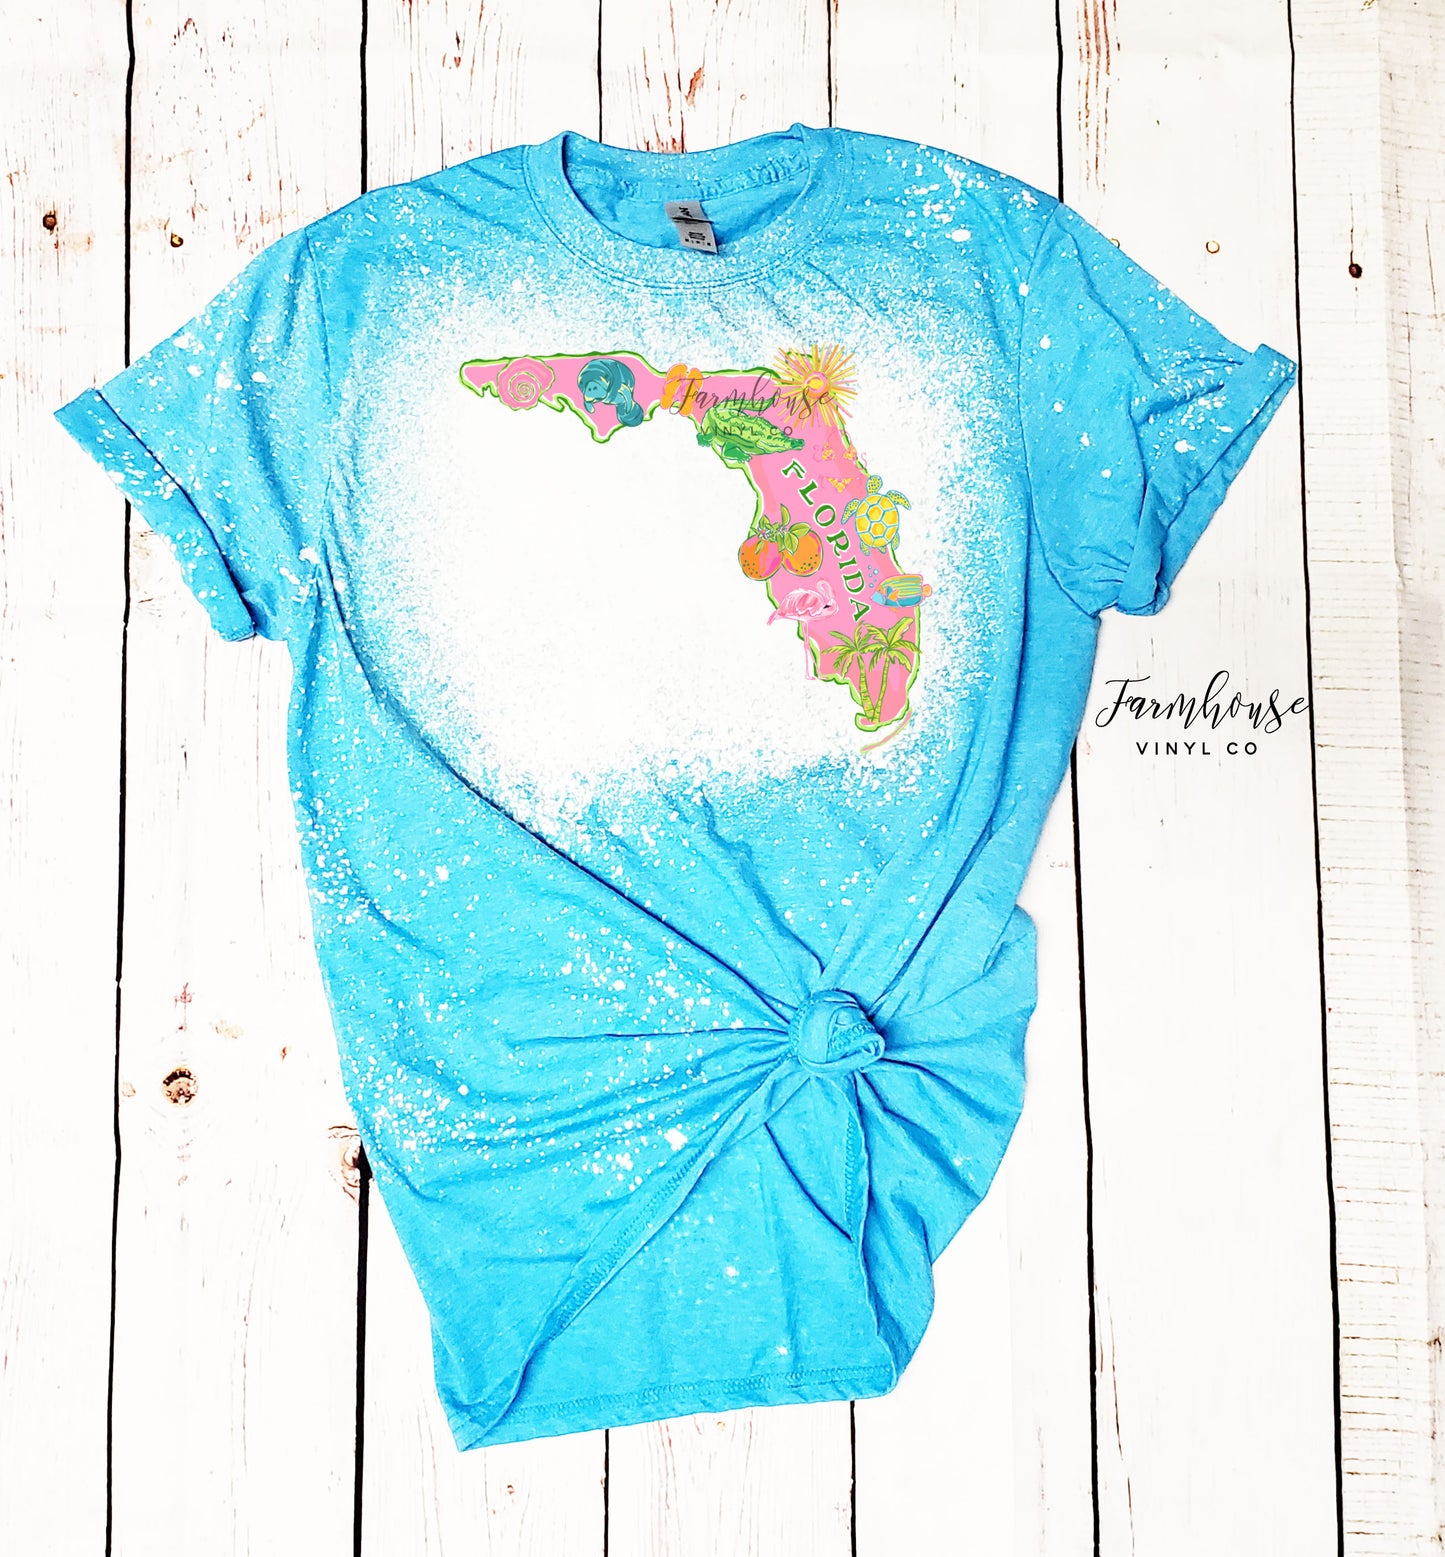 Florida Style Bleached Shirt - Farmhouse Vinyl Co